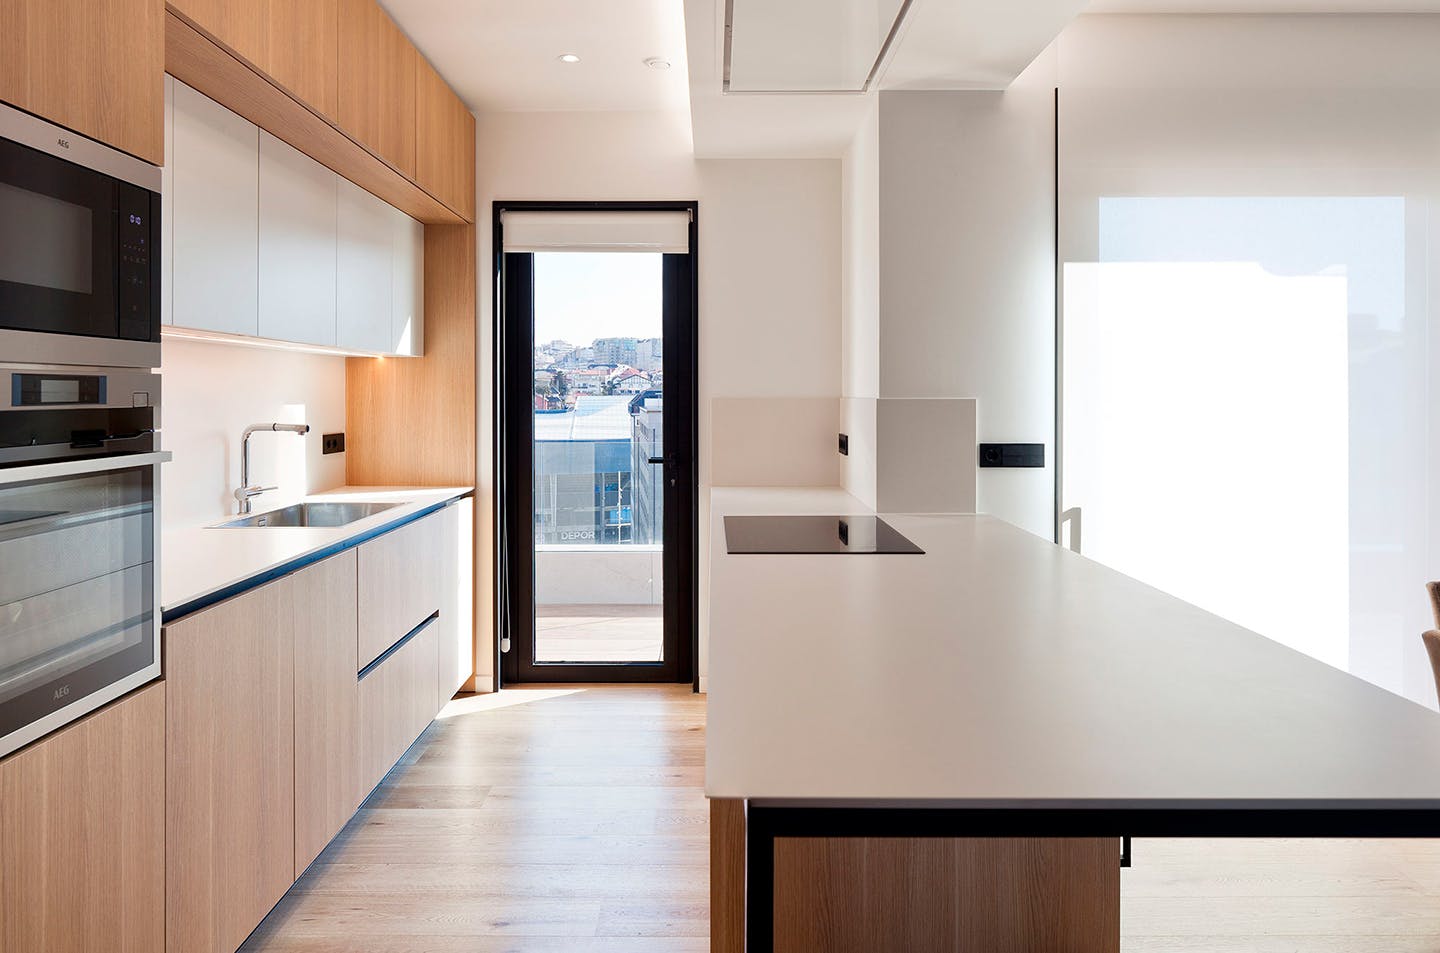 Numéro d'image 38 de la section actuelle de Dekton for the stunning kitchens of a residential tower in Dubai de Cosentino France